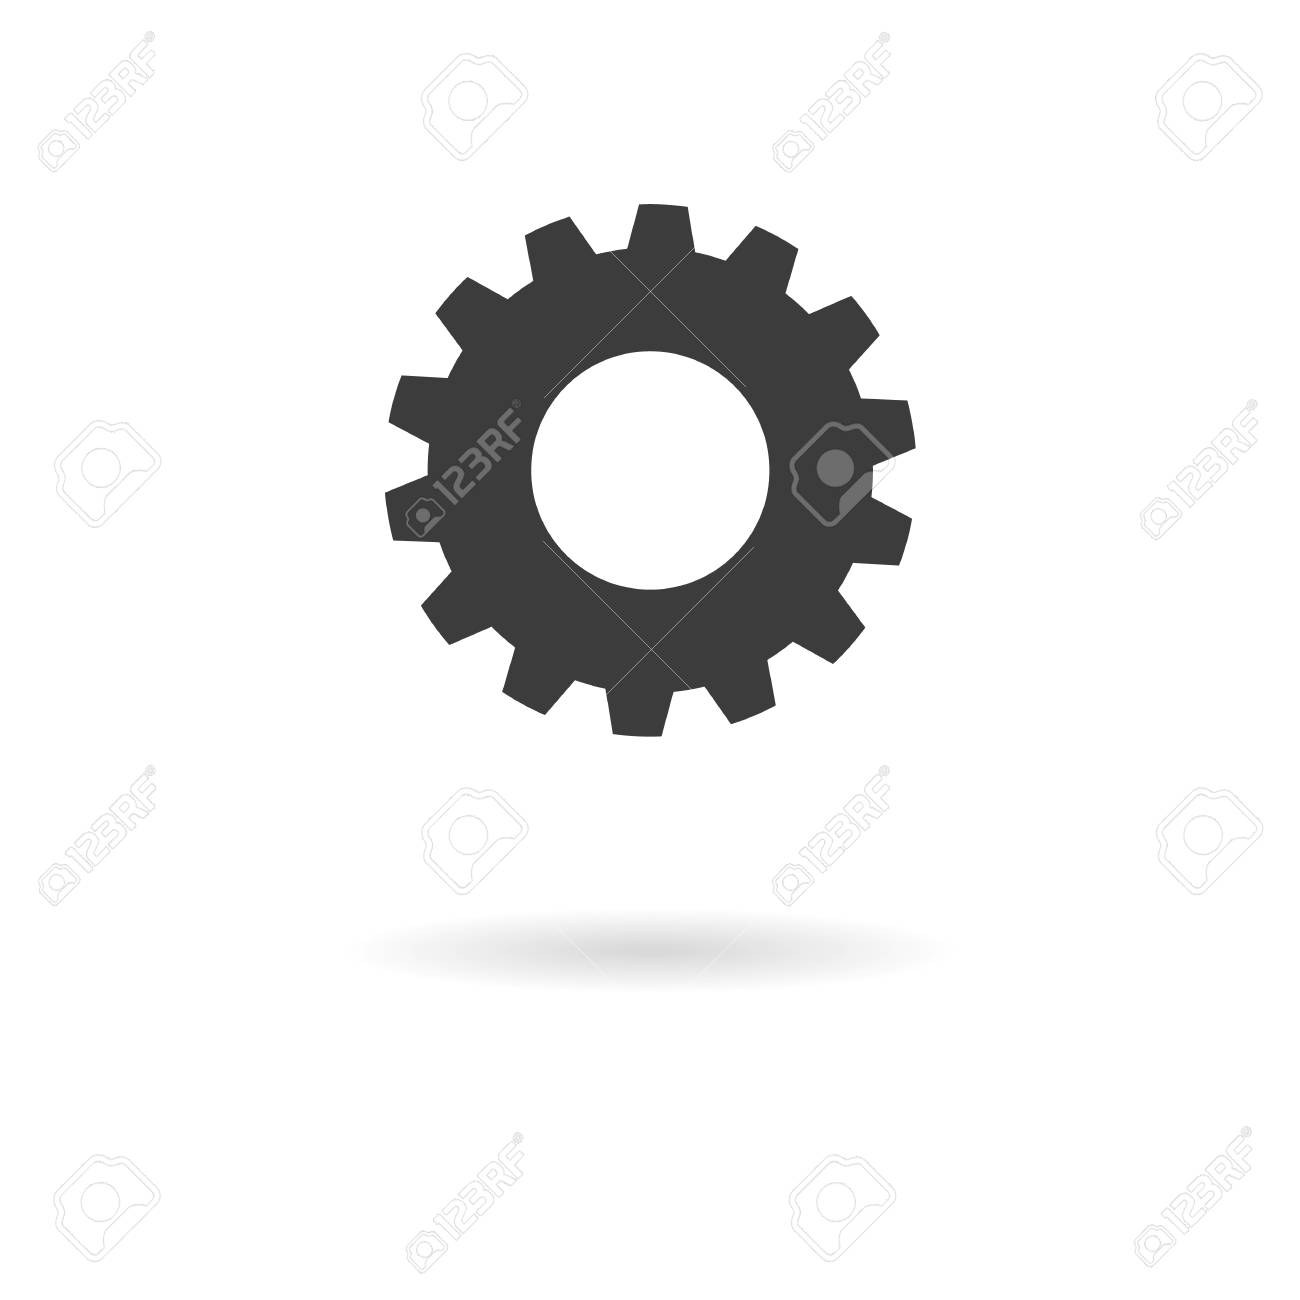 Settings gear icon  Stock Vector  quka #145657097